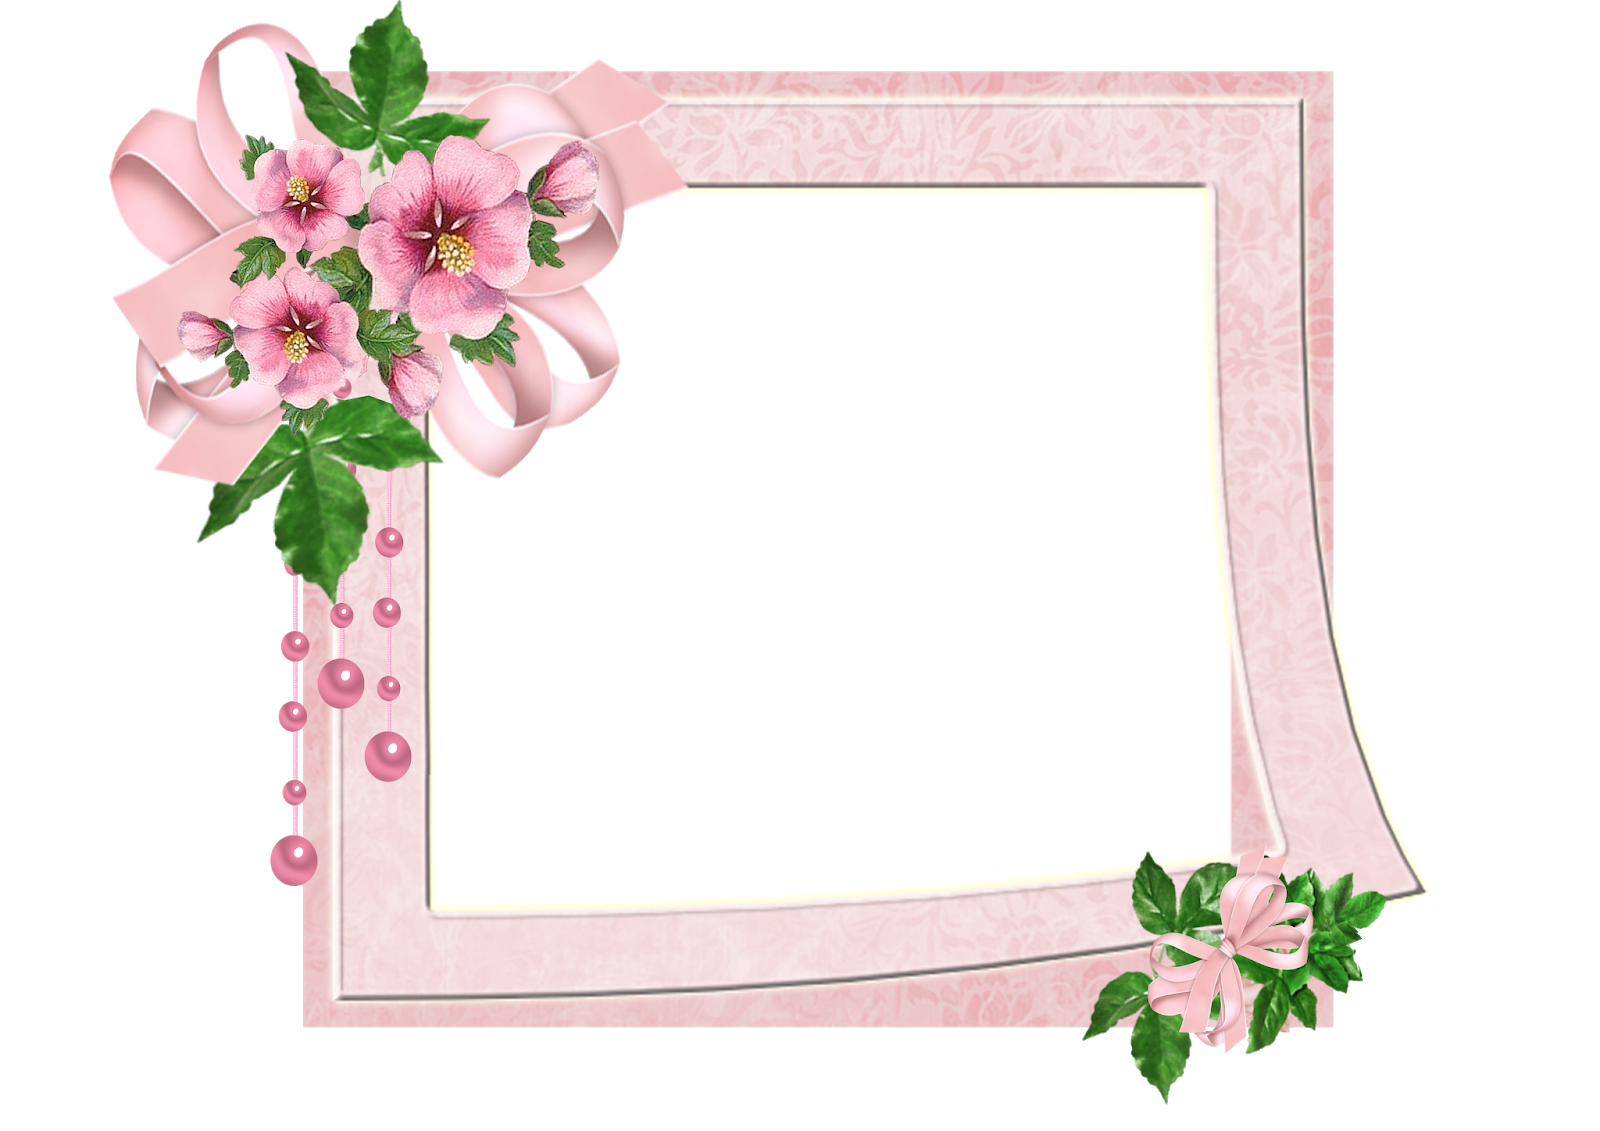 Рамка для текста для женщины. Рамка цветы. Цветочная рамка. Красивая рамка. Красивая рамка для поздравления.